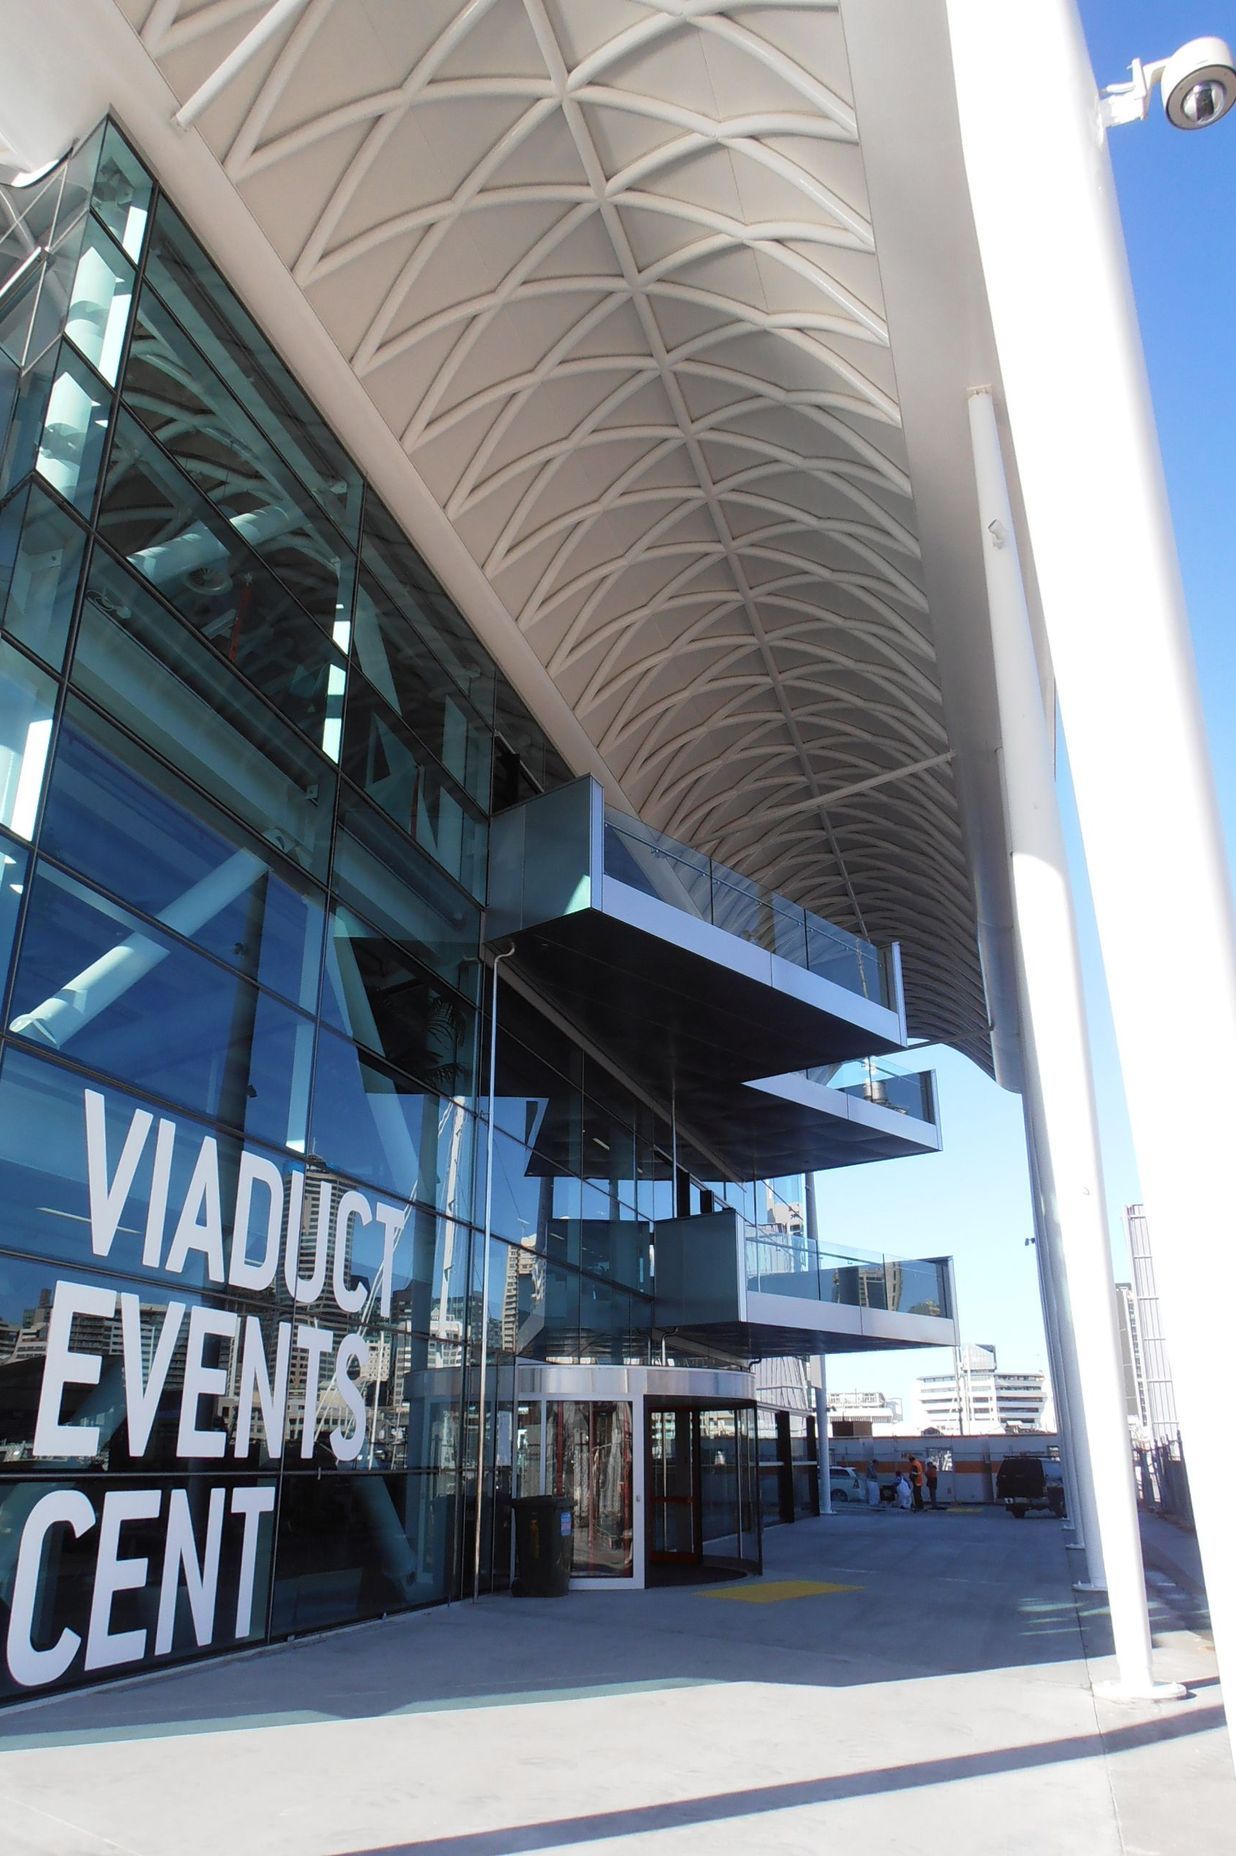 Viaduct Events Centre